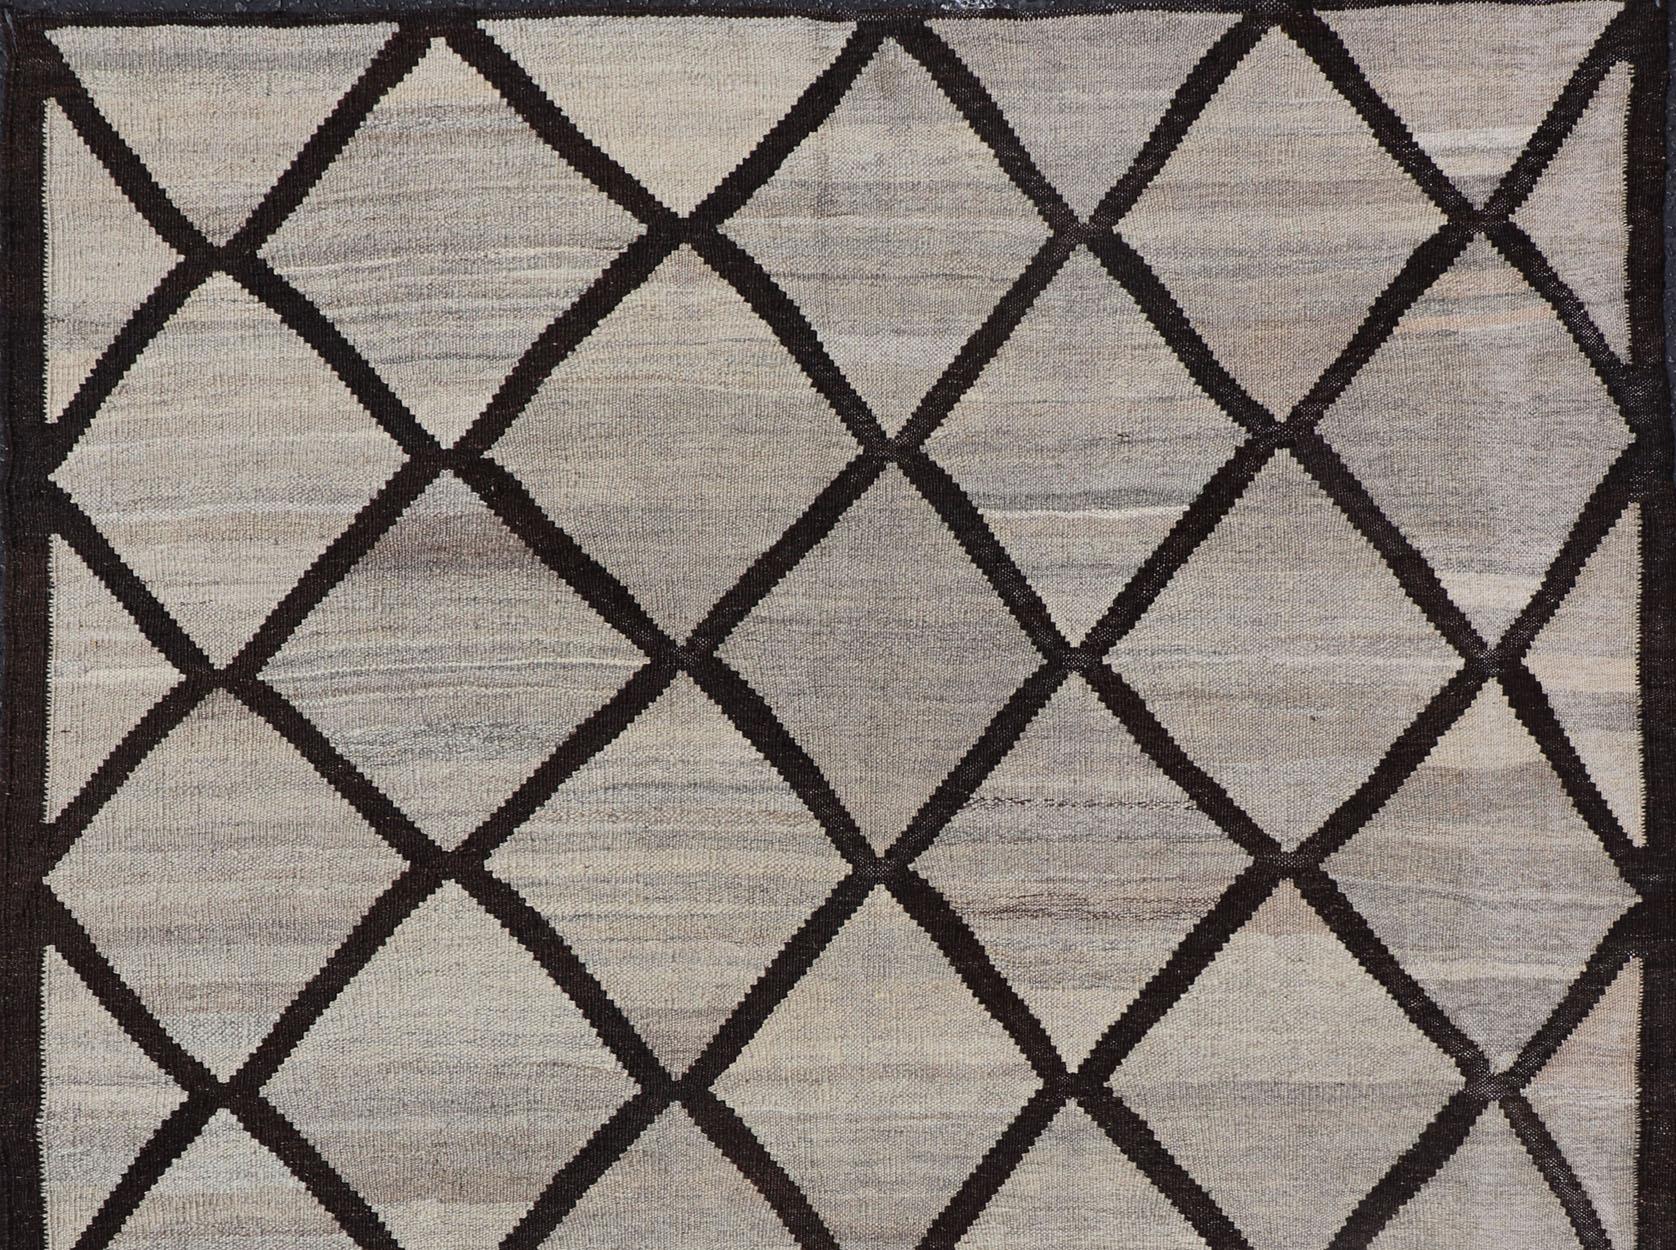 Natural color-tone flat-weave Kilim with dark brown Diamond Design

Versatile and natural color-tone flat-weave Kilim for a modern or Classic diamond design
Keivan Woven Arts/ rug AFG-141, country of origin / type: Afghanistan /